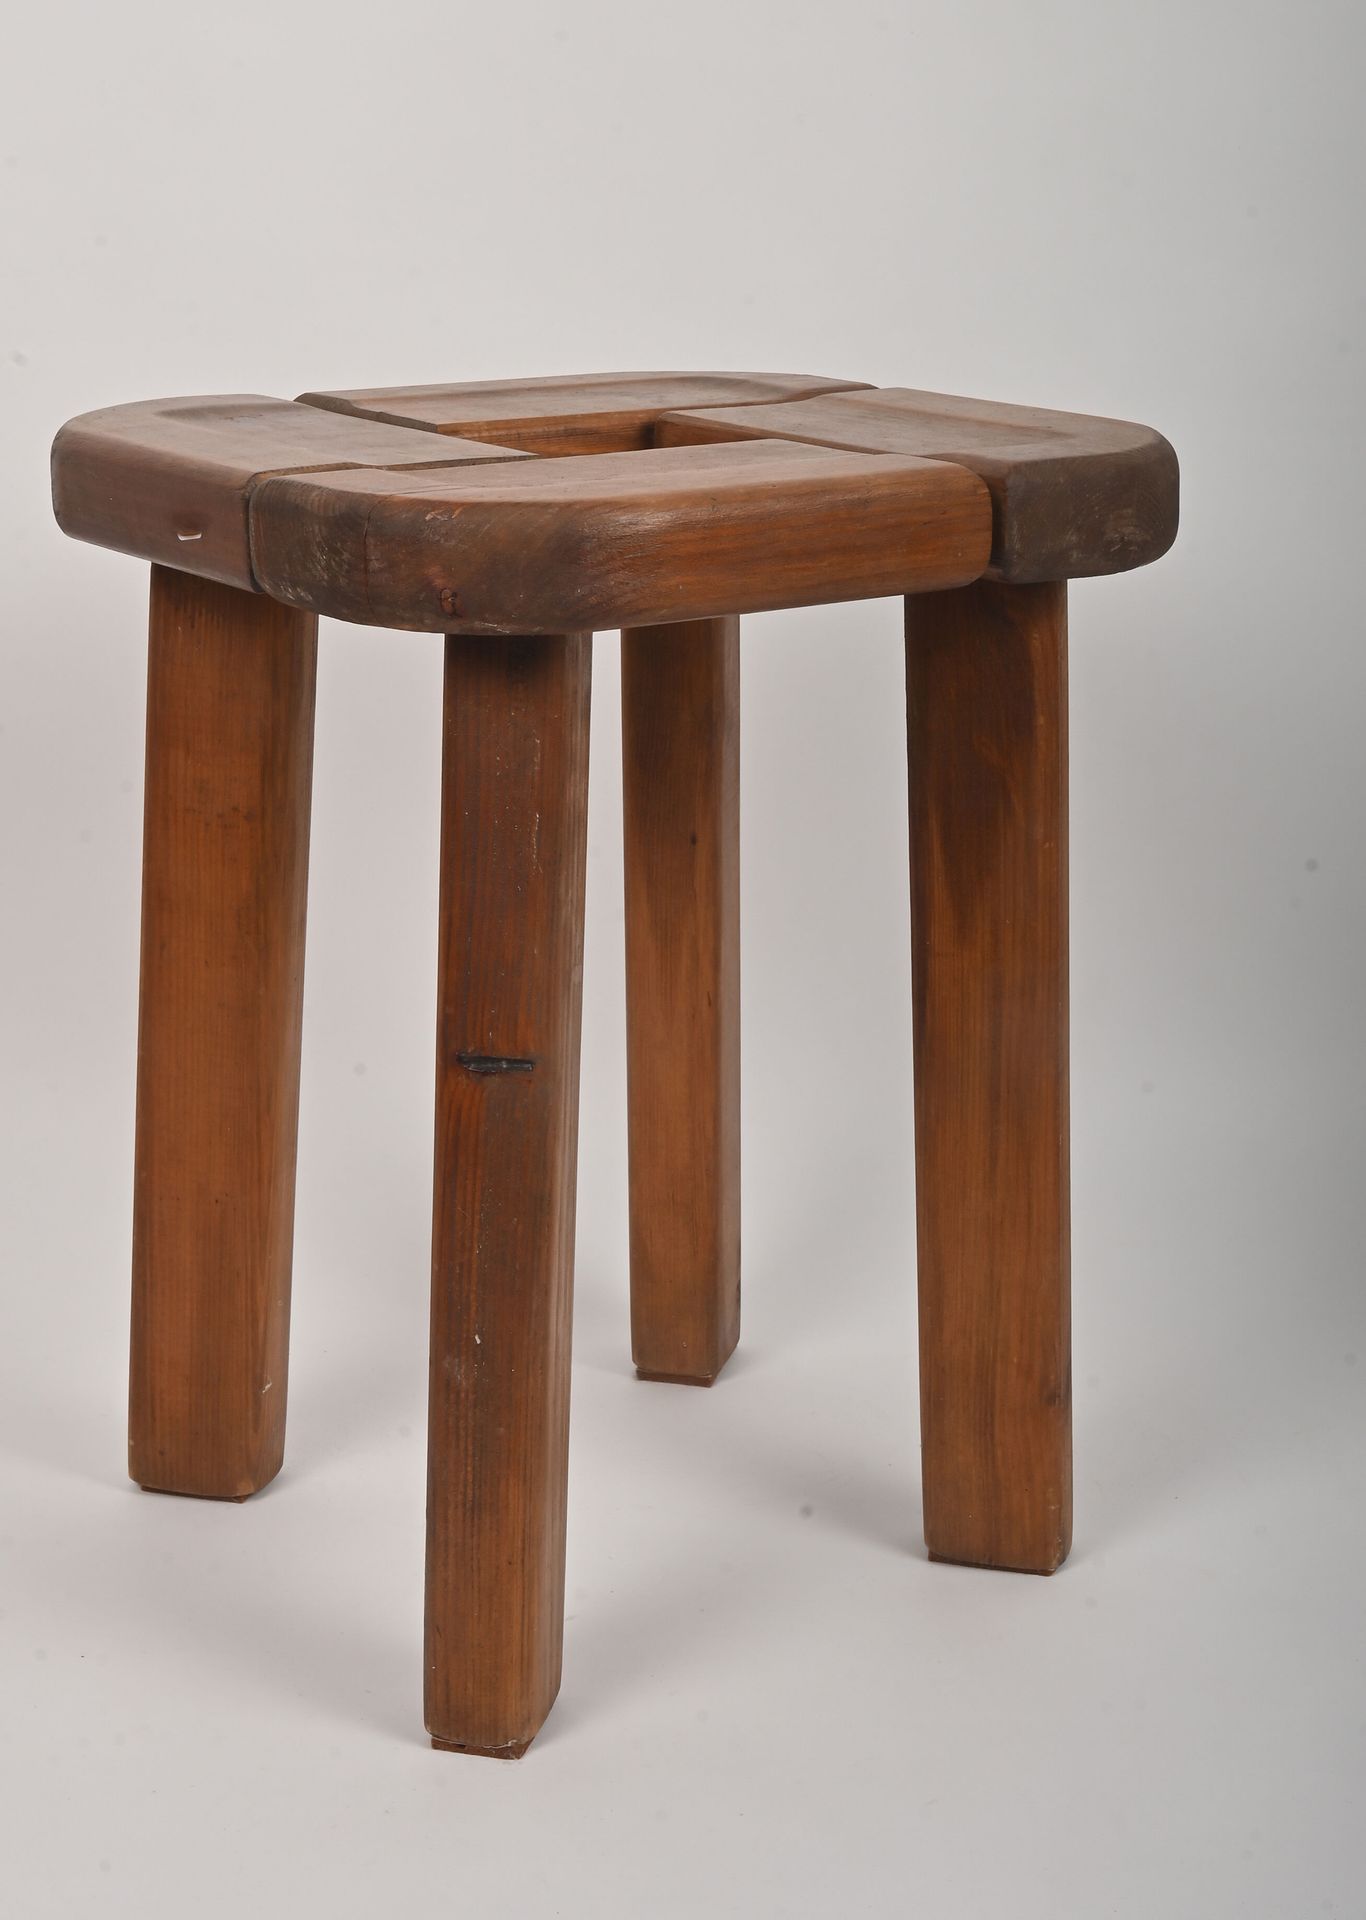 Null LAGERHLOM
凳子模型 "Finnsauna"，松木，在座位下签名（轻微磨损）。
41 x 31 x 31厘米。